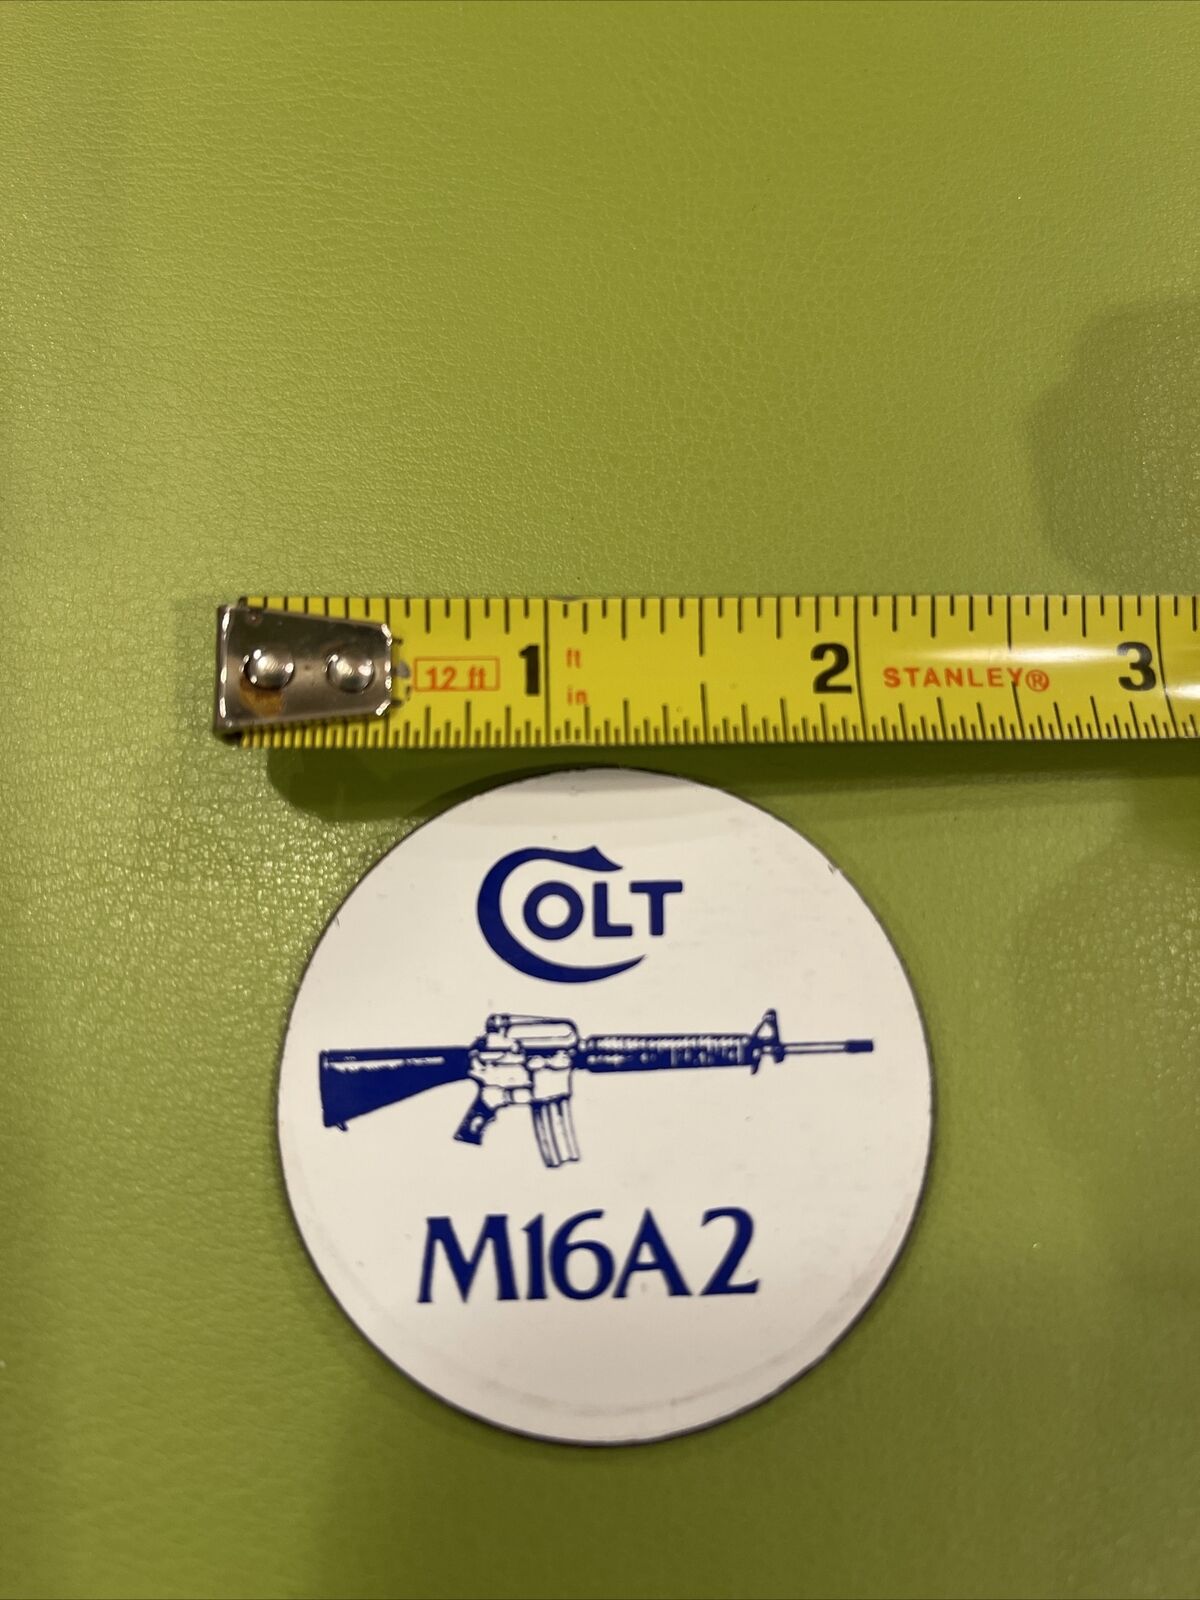 Colt Firearms Memorabilia M16 Magnet